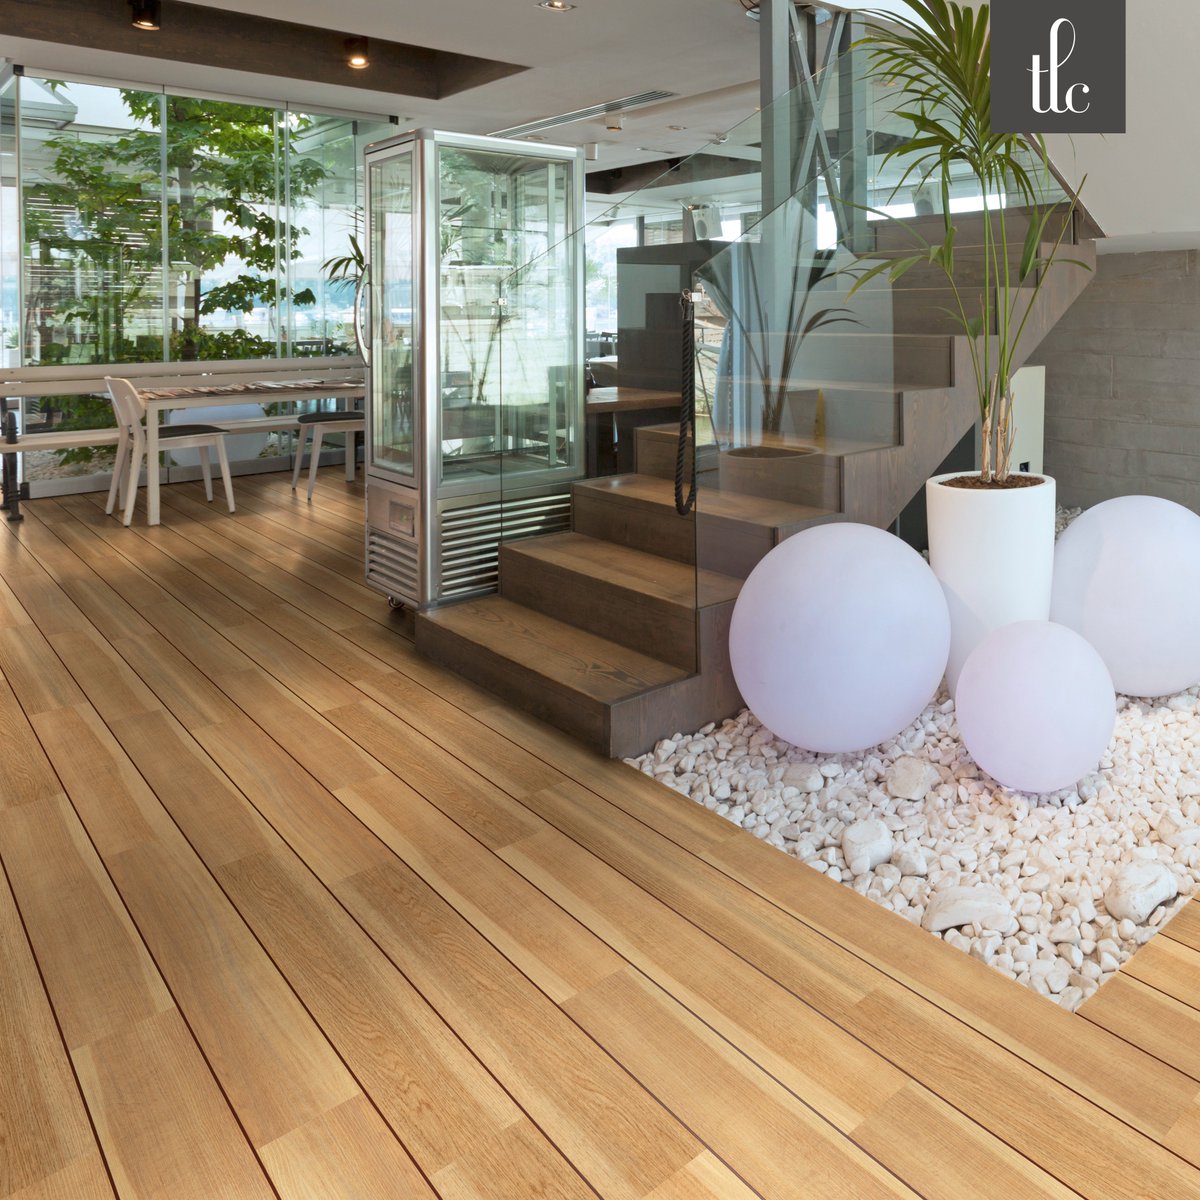 English Oak 5263 - Straight laid with Brown feature strips #englishoak #flooring #interiordesign #luxuryvinyltiles